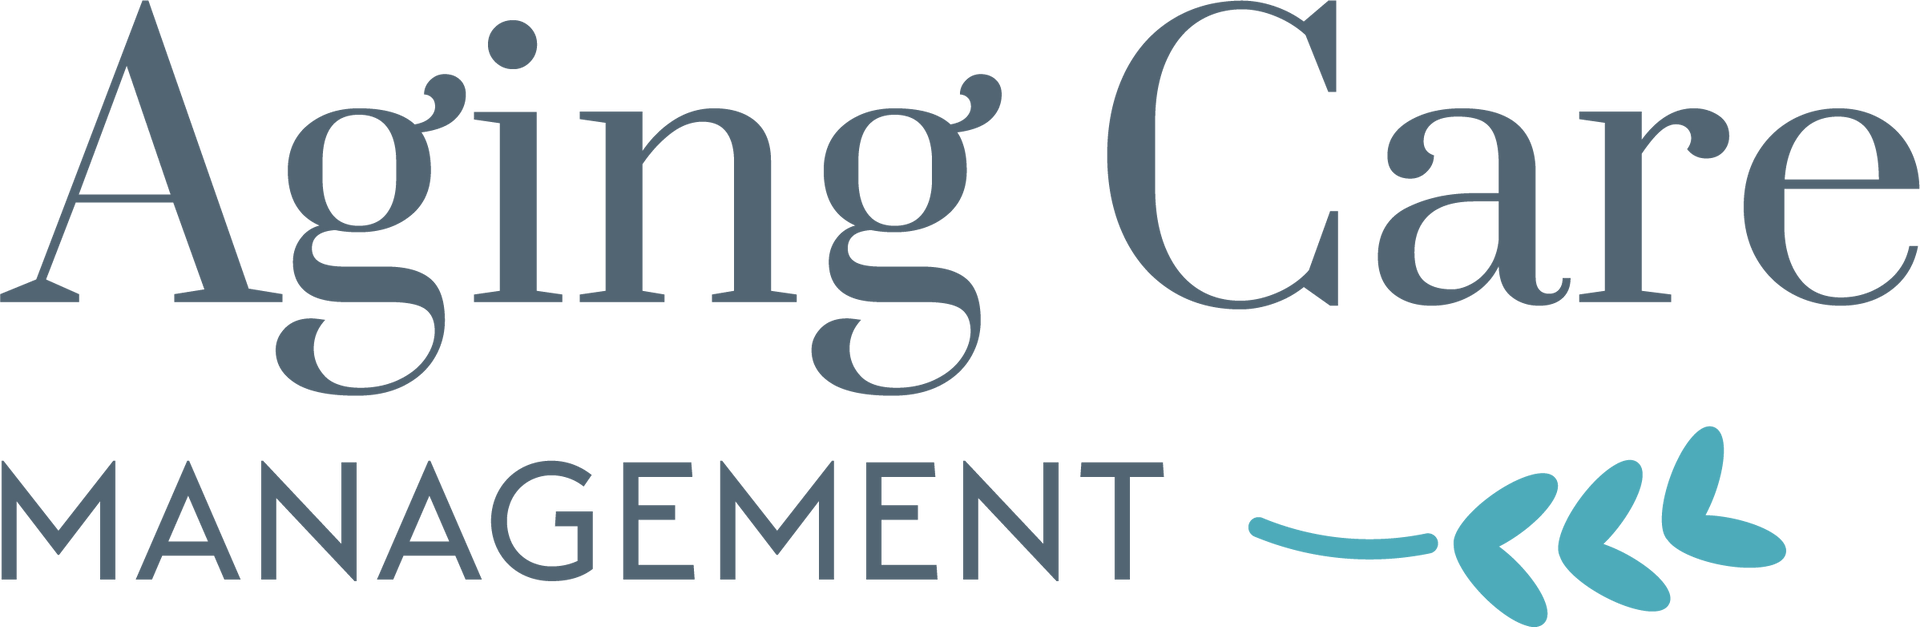 Aging Care Management logo